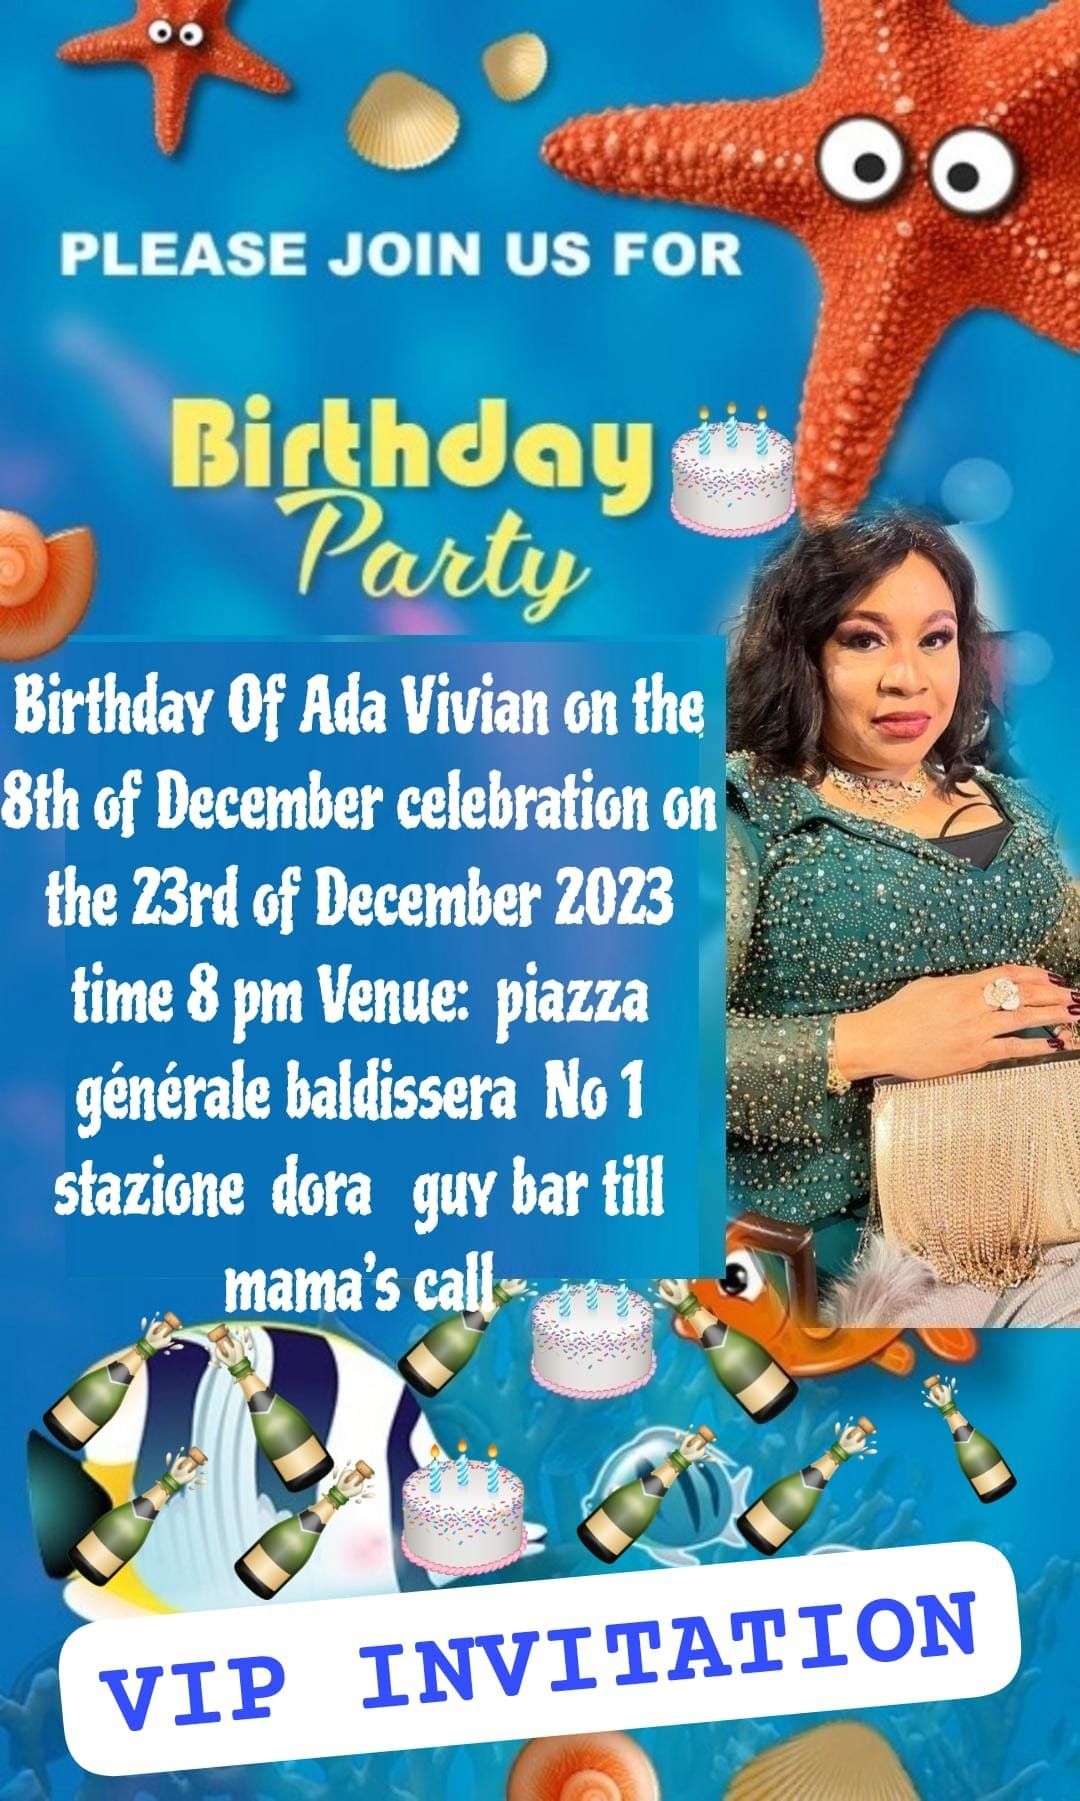 A Grand Celebration Awaits: Ada Vivian's Spectacular Birthday Extravaganza